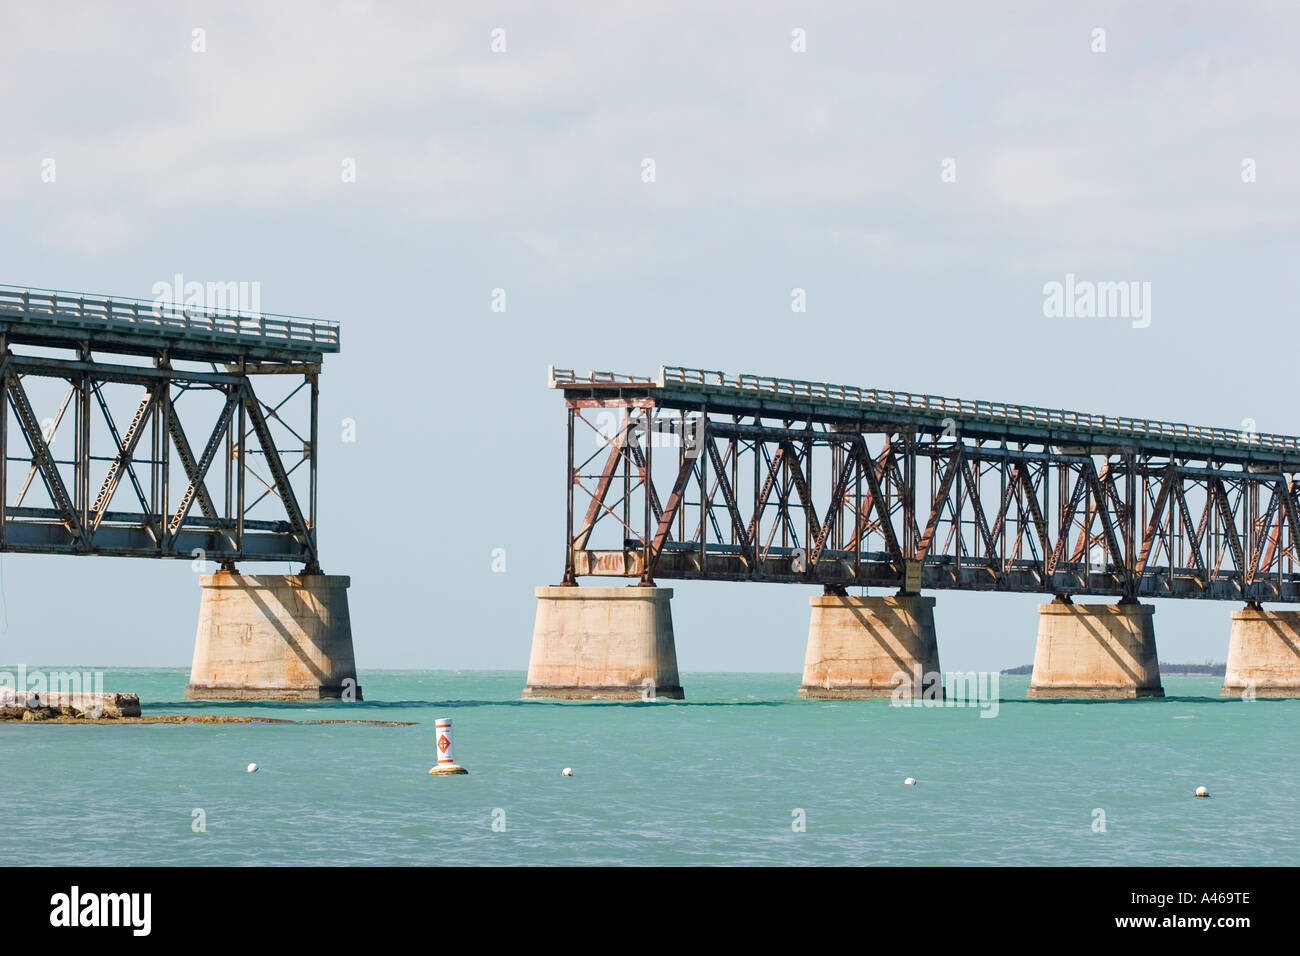 USA, Florida, Bahia Honda Bridge, old and destruct railway bridge at the Florida Keys Stock Photo